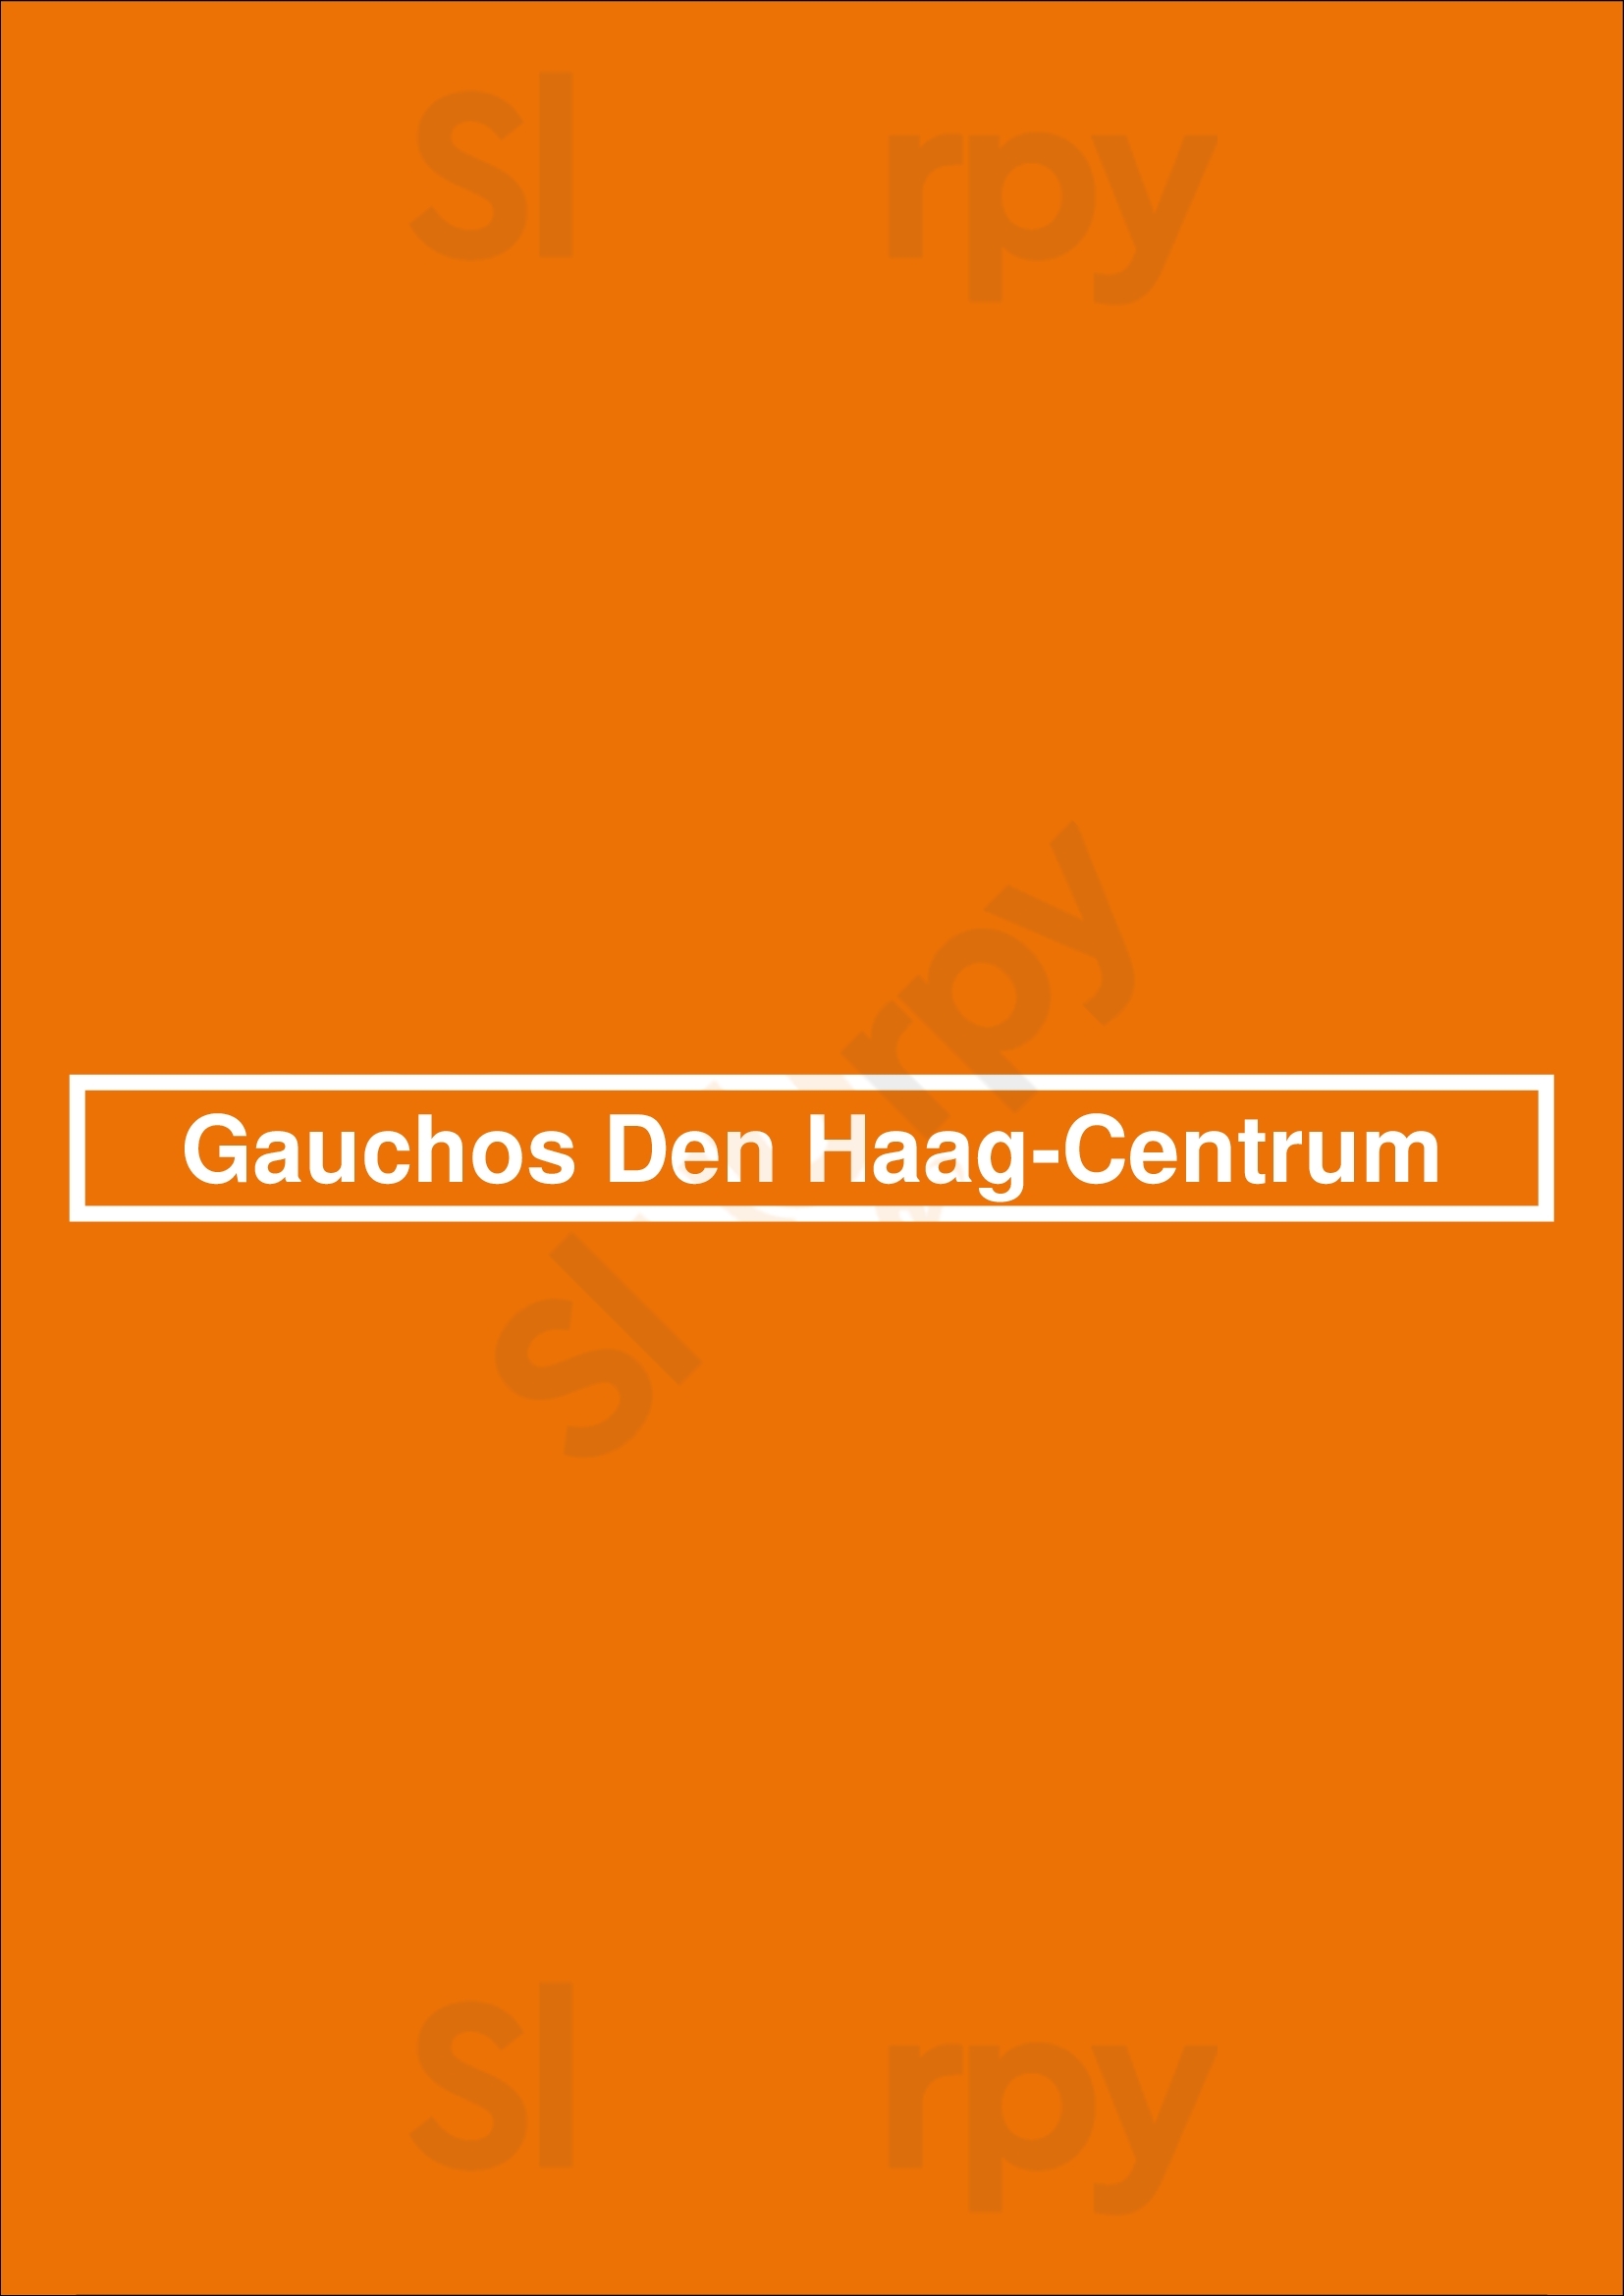 Gauchos Den Haag-centrum Den Haag Menu - 1